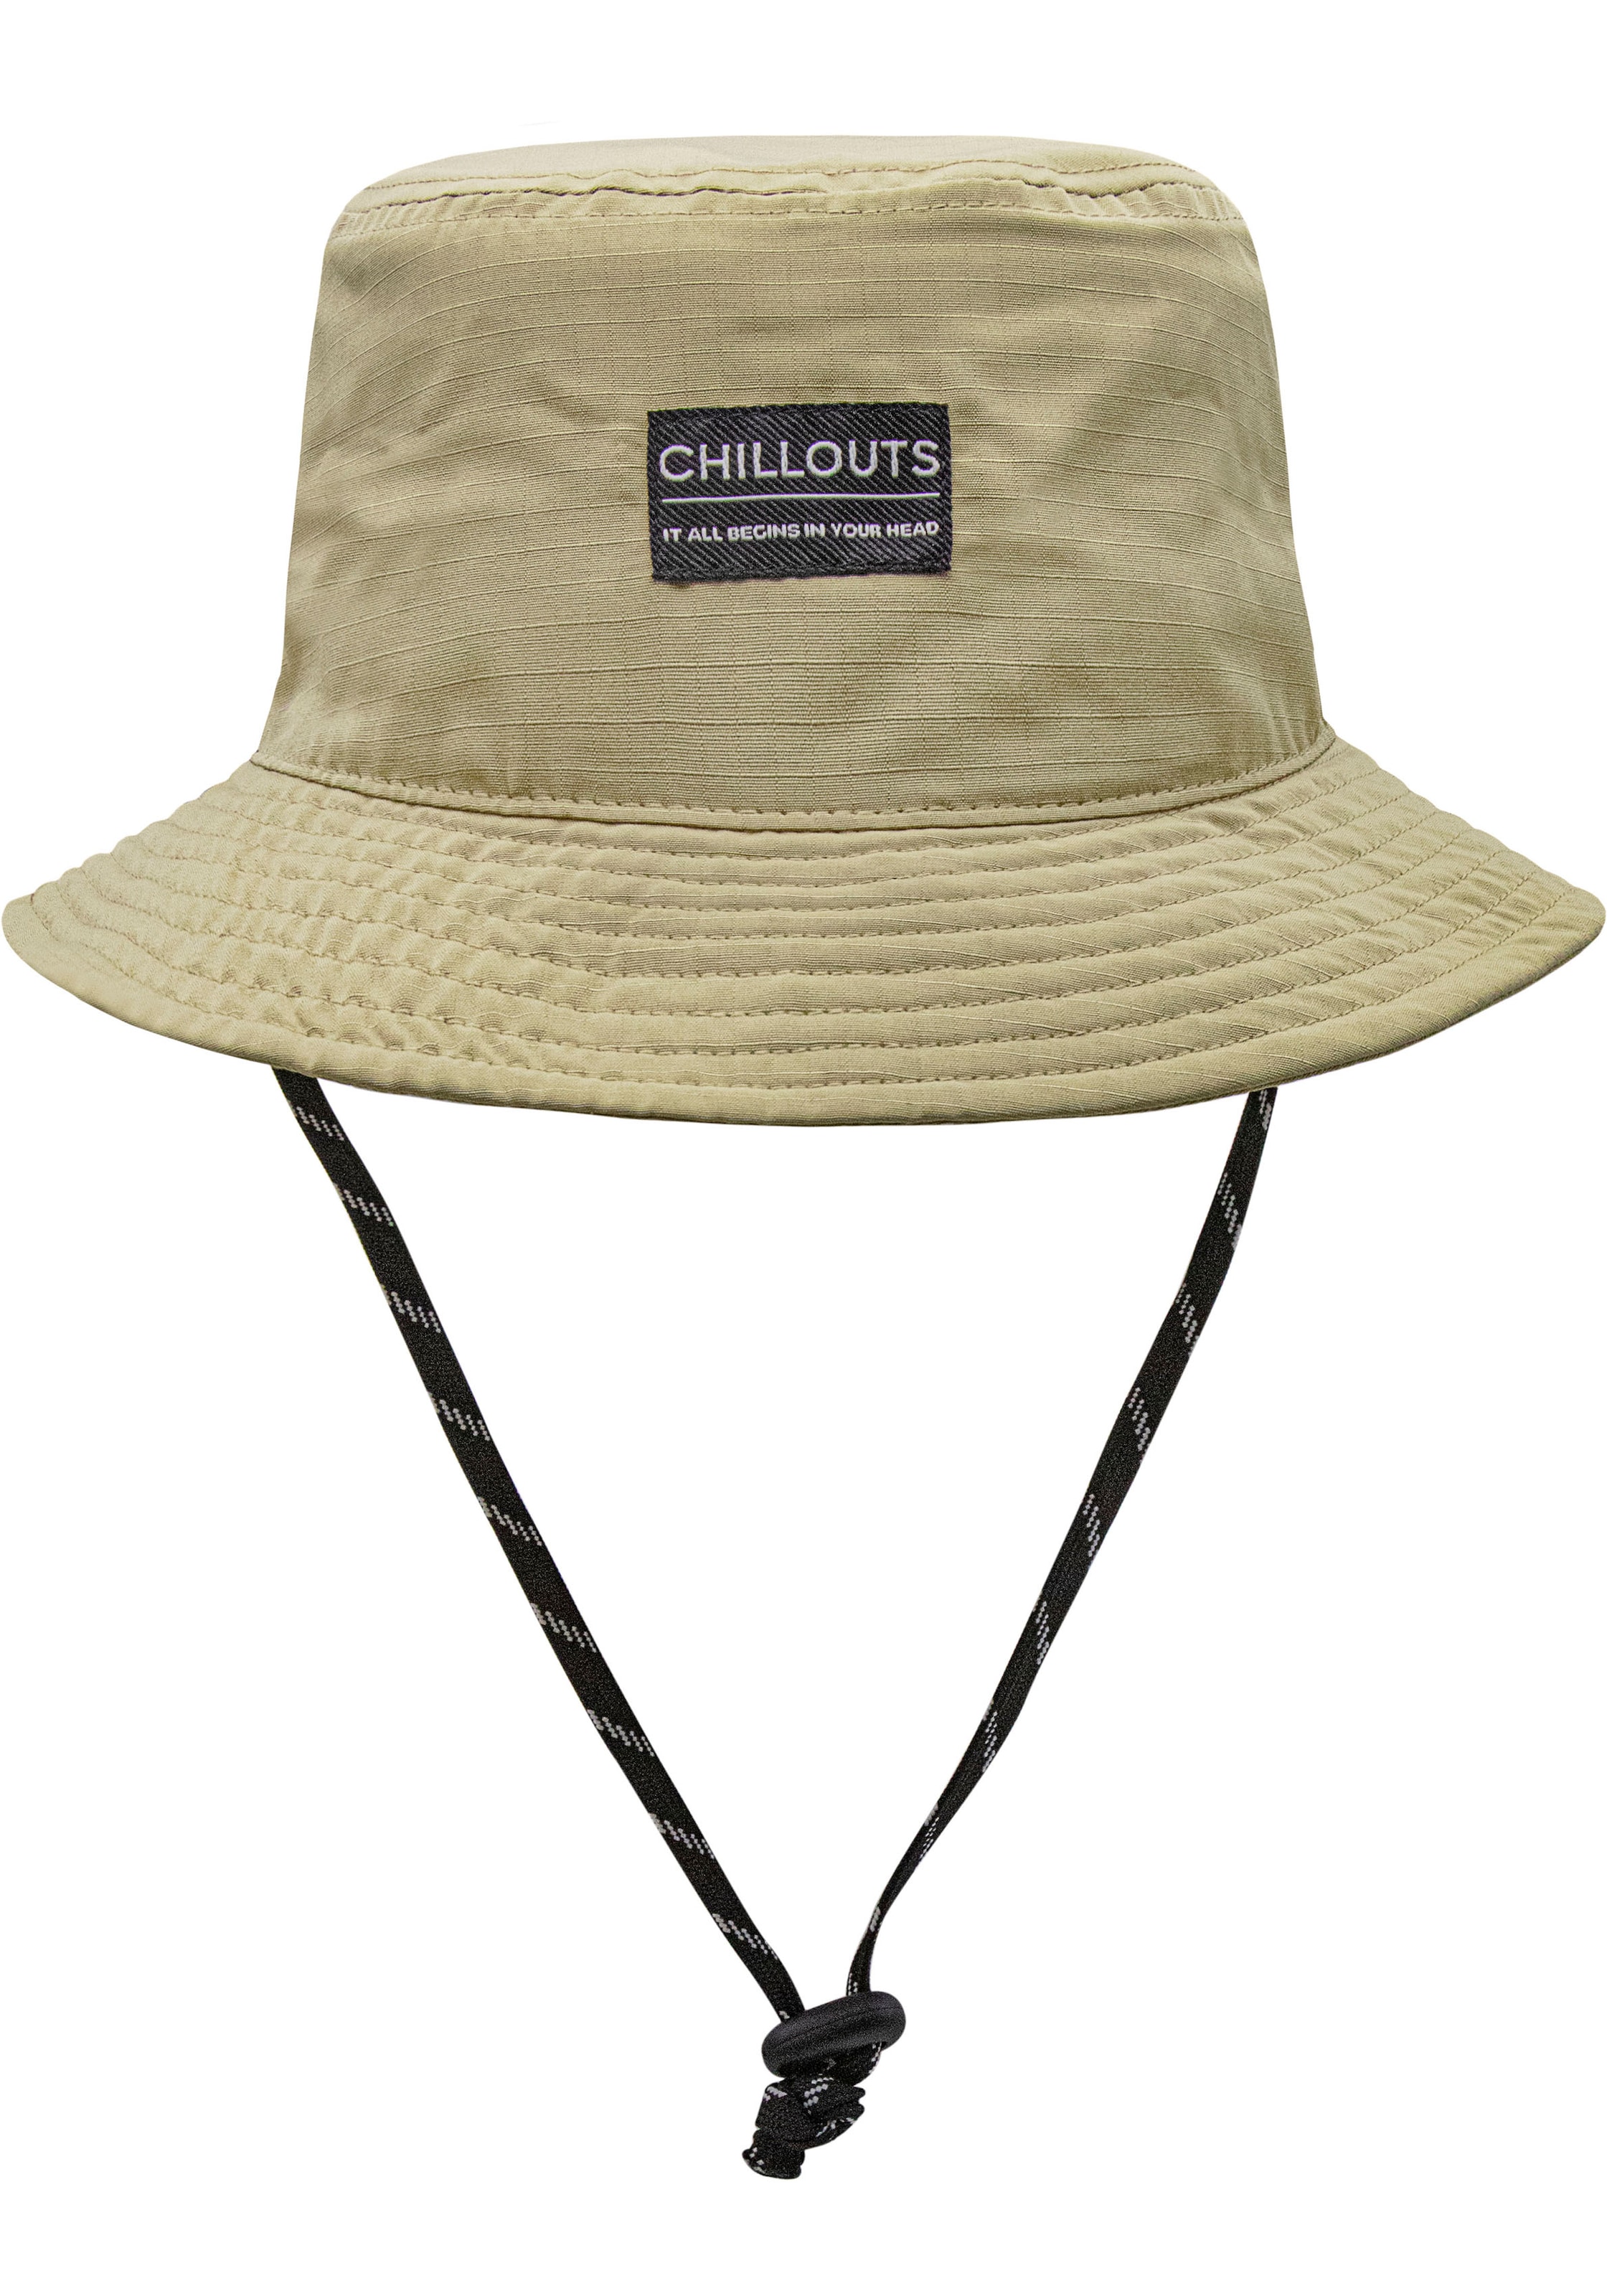 chillouts Sonnenhut, Pasay bei OTTO bestellen Hat online